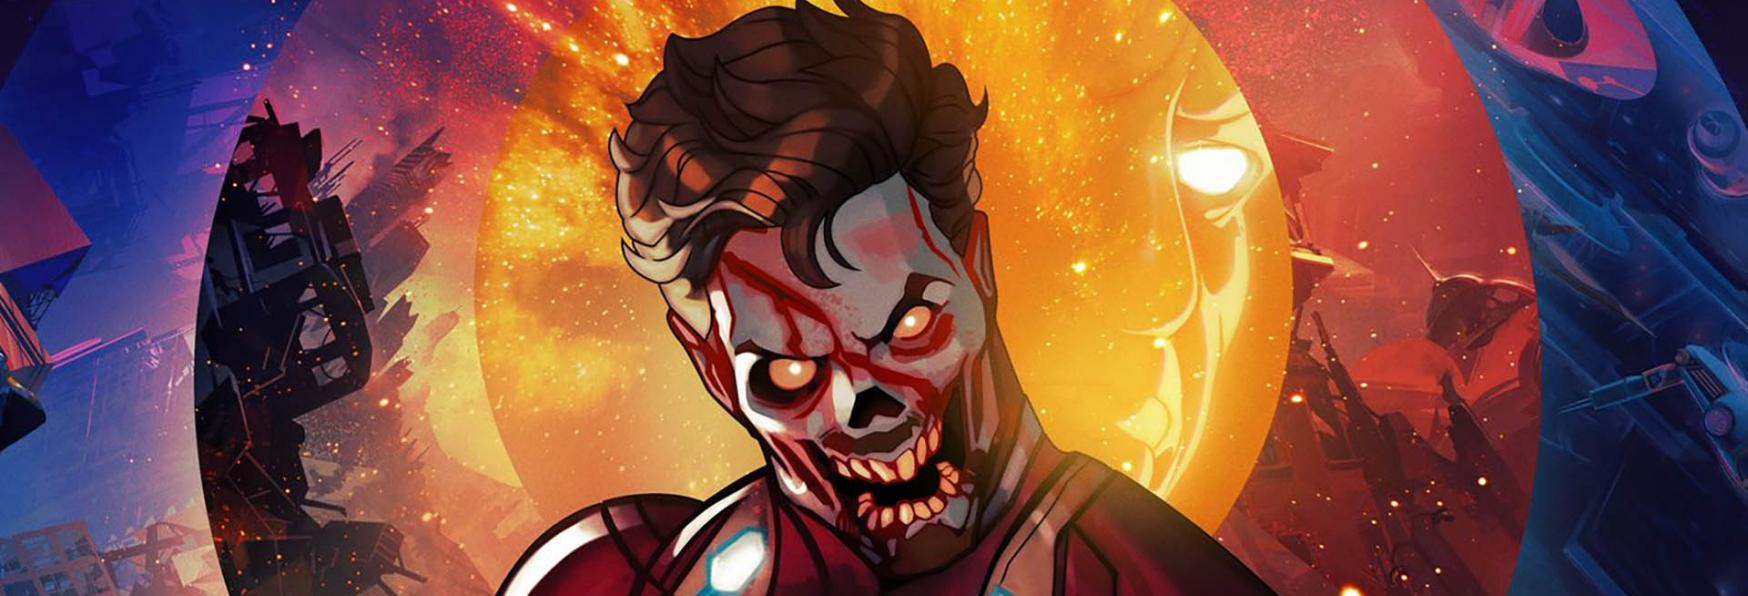 Marvel Zombies: Disney+ annuncia la nuova Serie Animata dei Marvel Studios